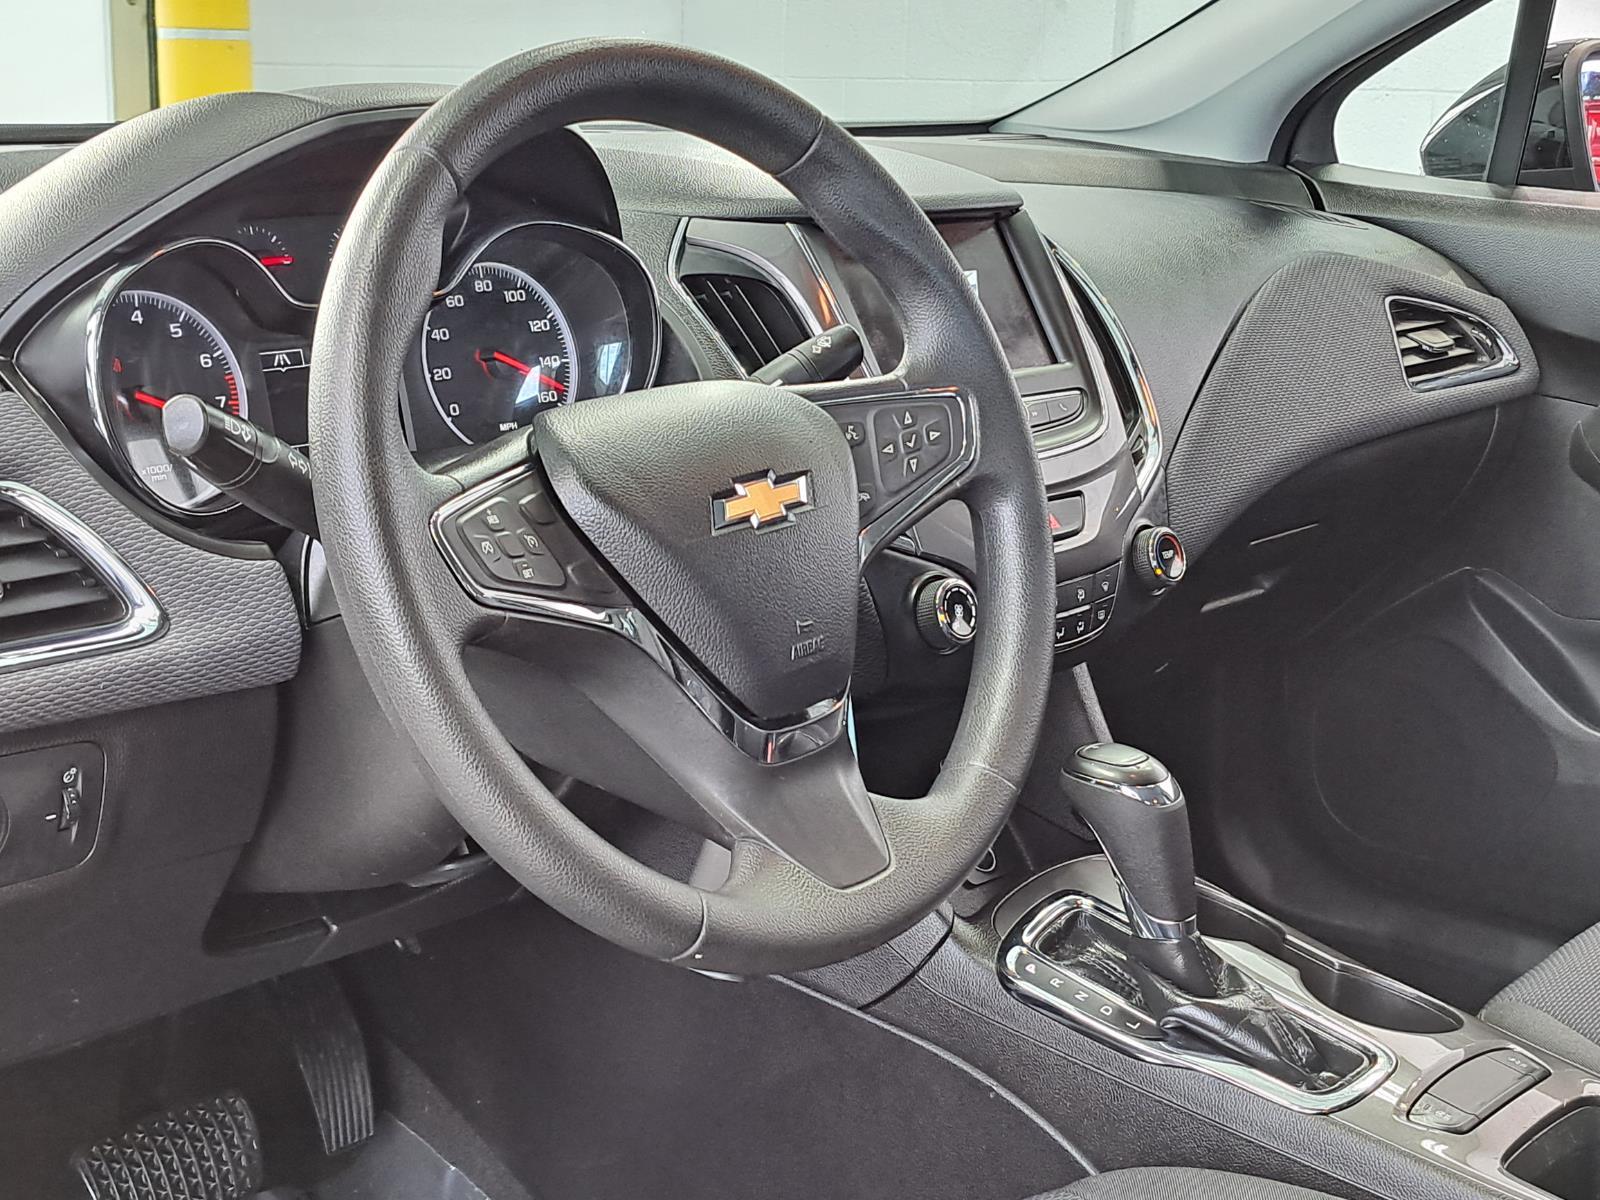 2019 Chevrolet Cruze LS Sedan 4 Dr. Front Wheel Drive mobile thumbnail 3